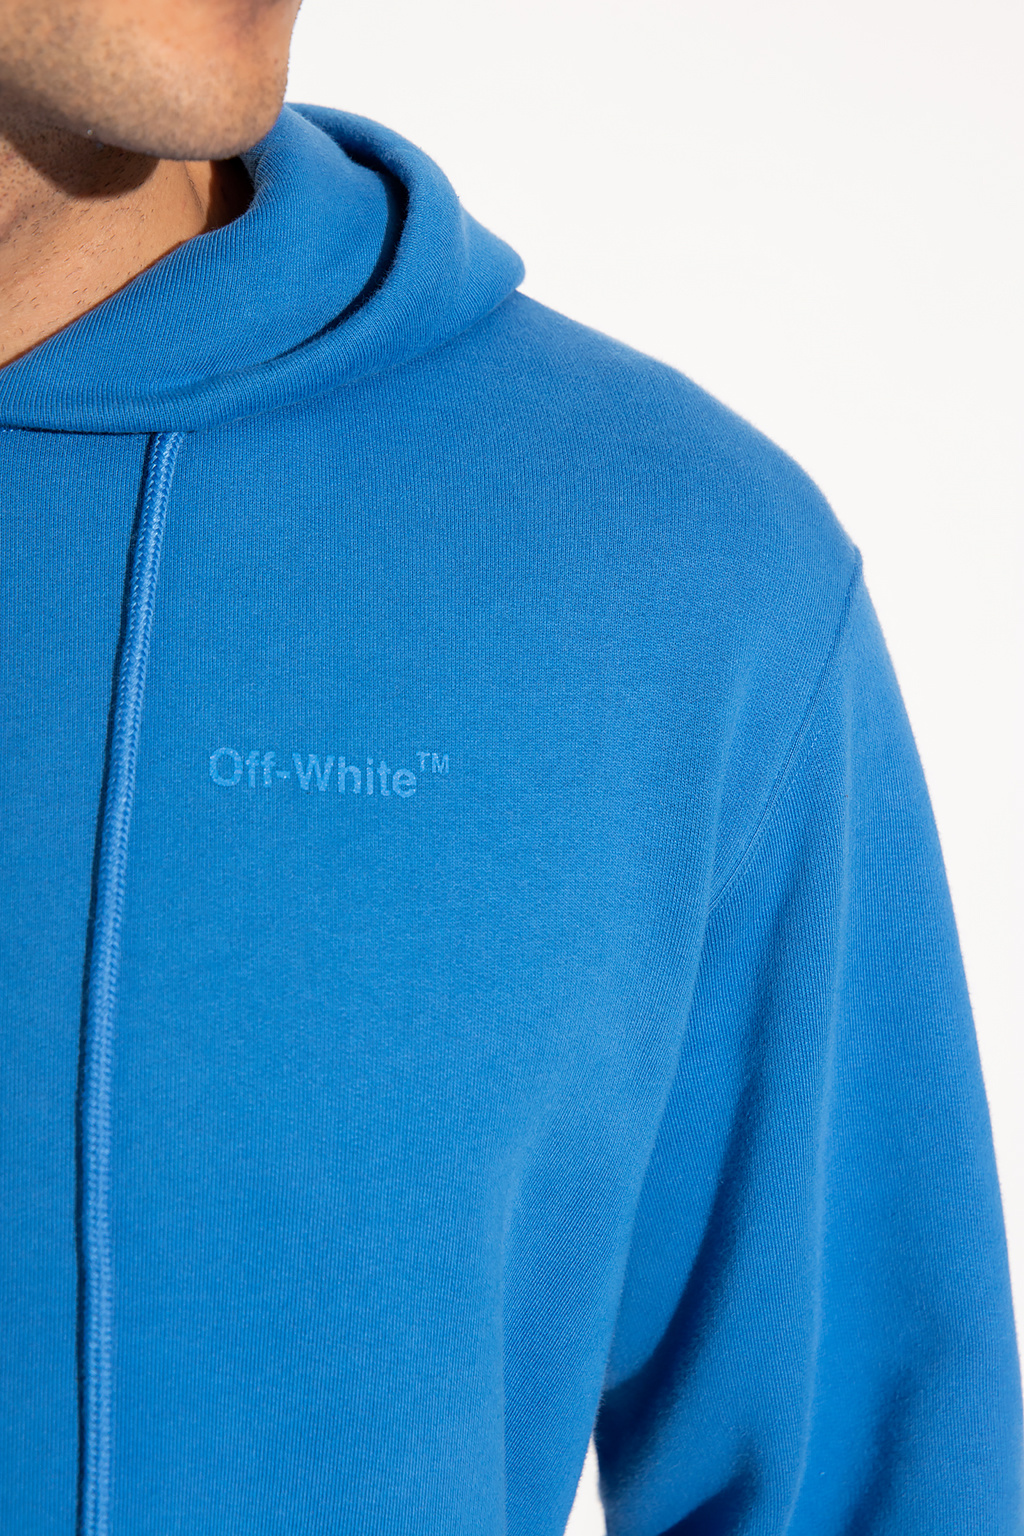 Off-White Cotton sundae hoodie